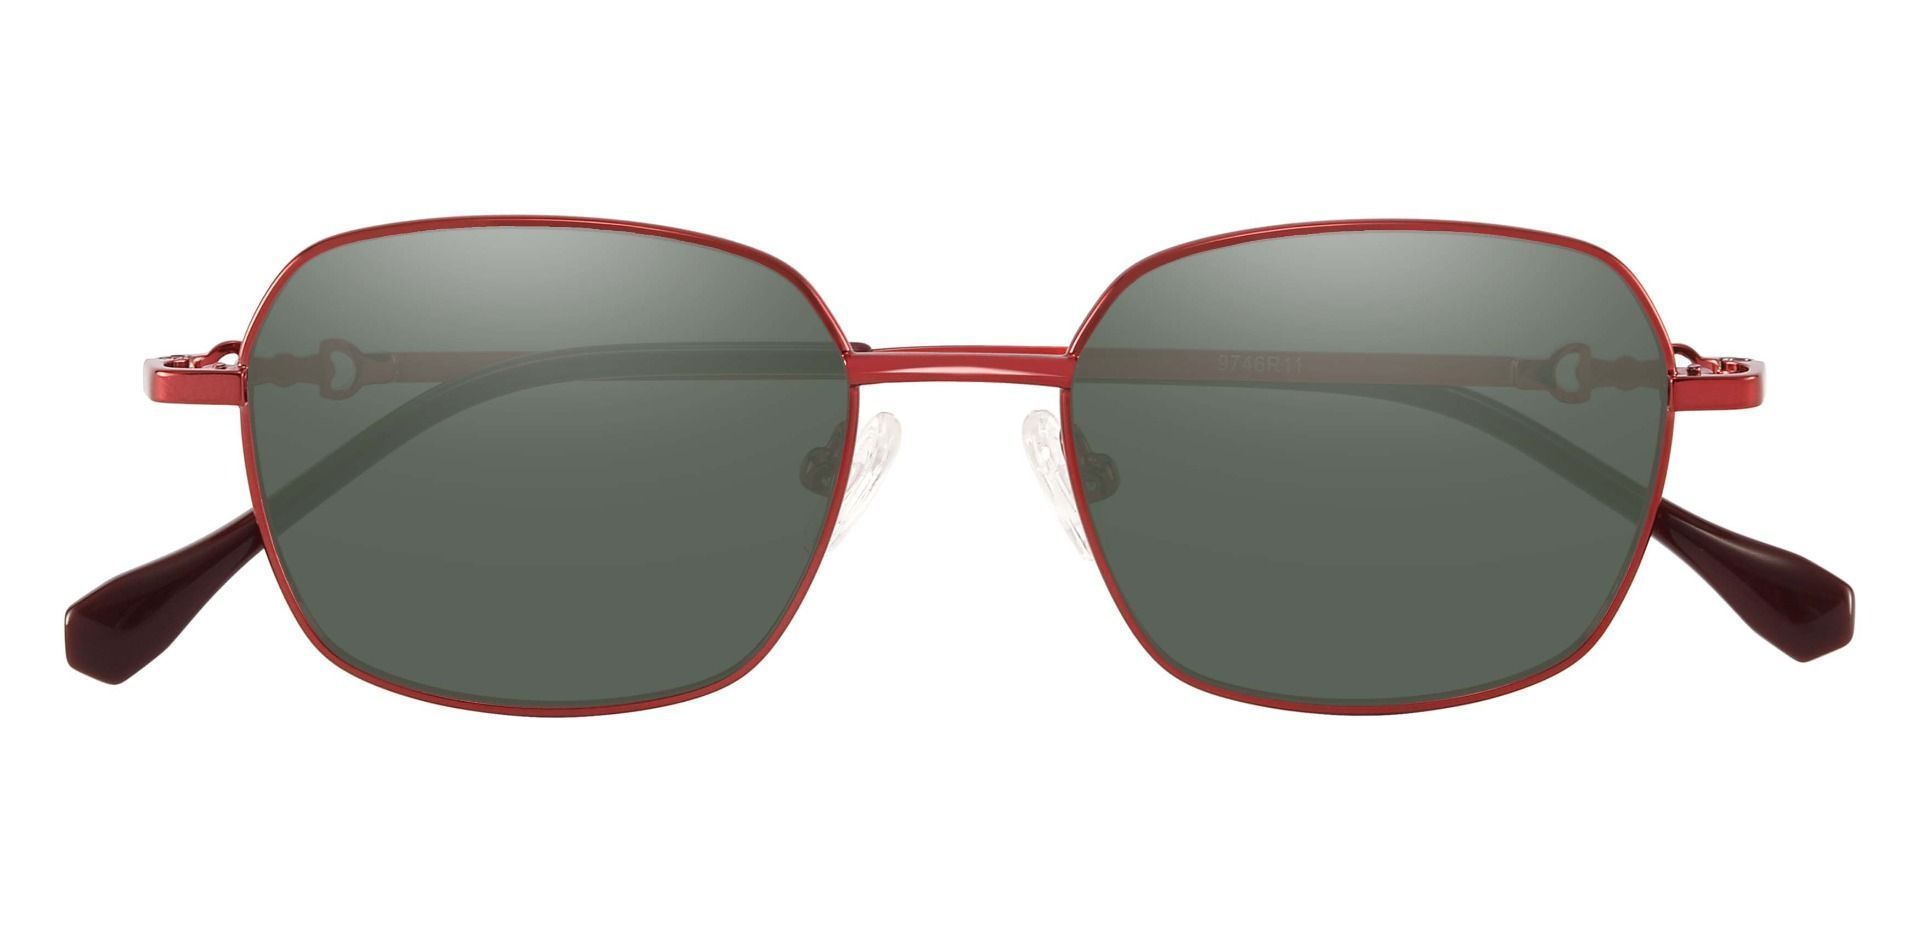 Averill Geometric Reading Sunglasses - Red Frame With Green Lenses